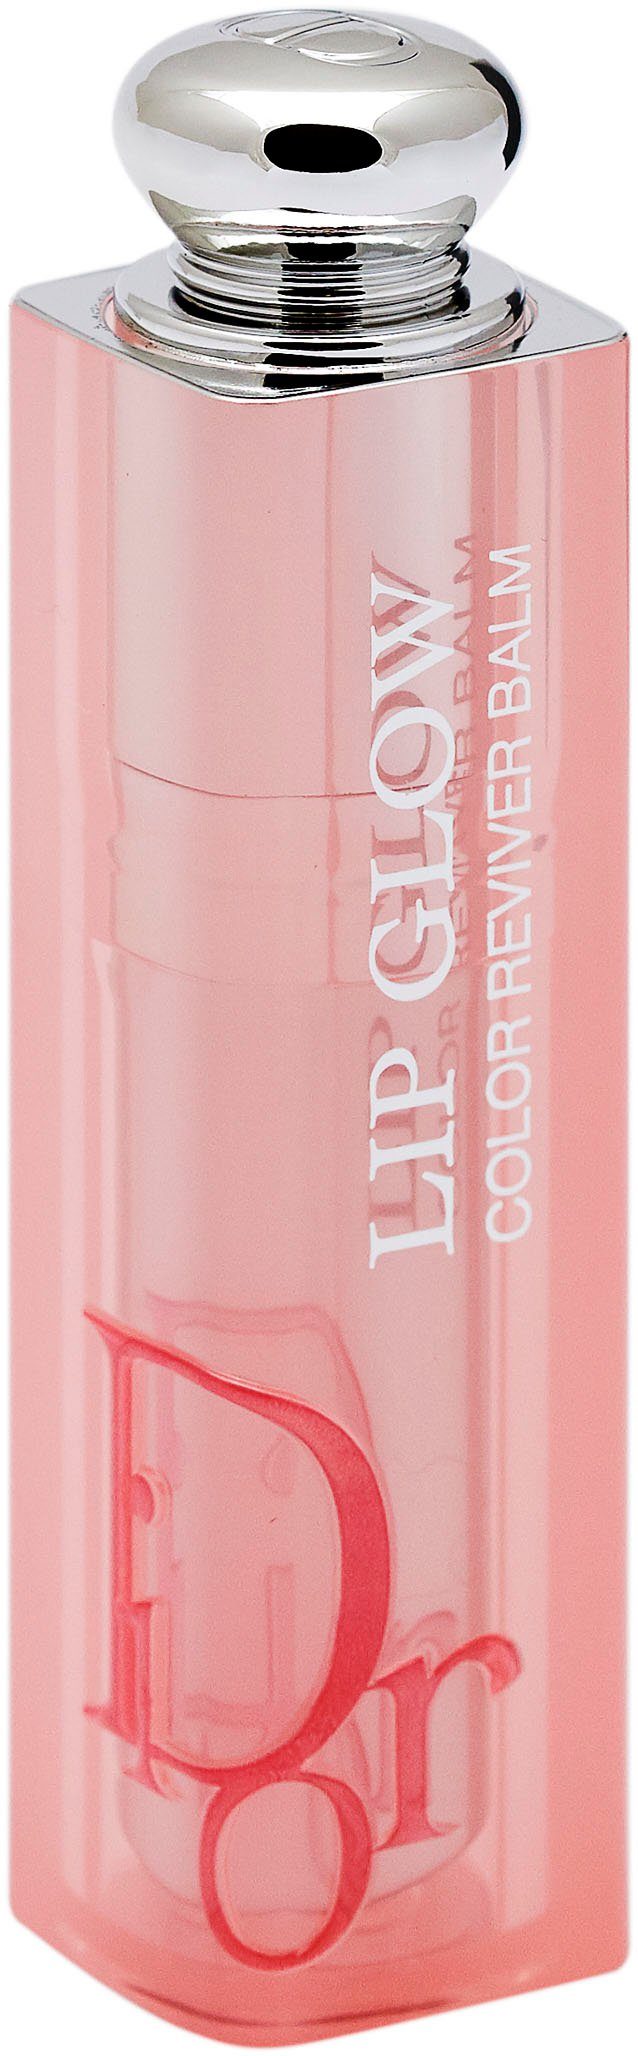 001 Dior Lippenbalsam Pink Lip Dior Glow Addict